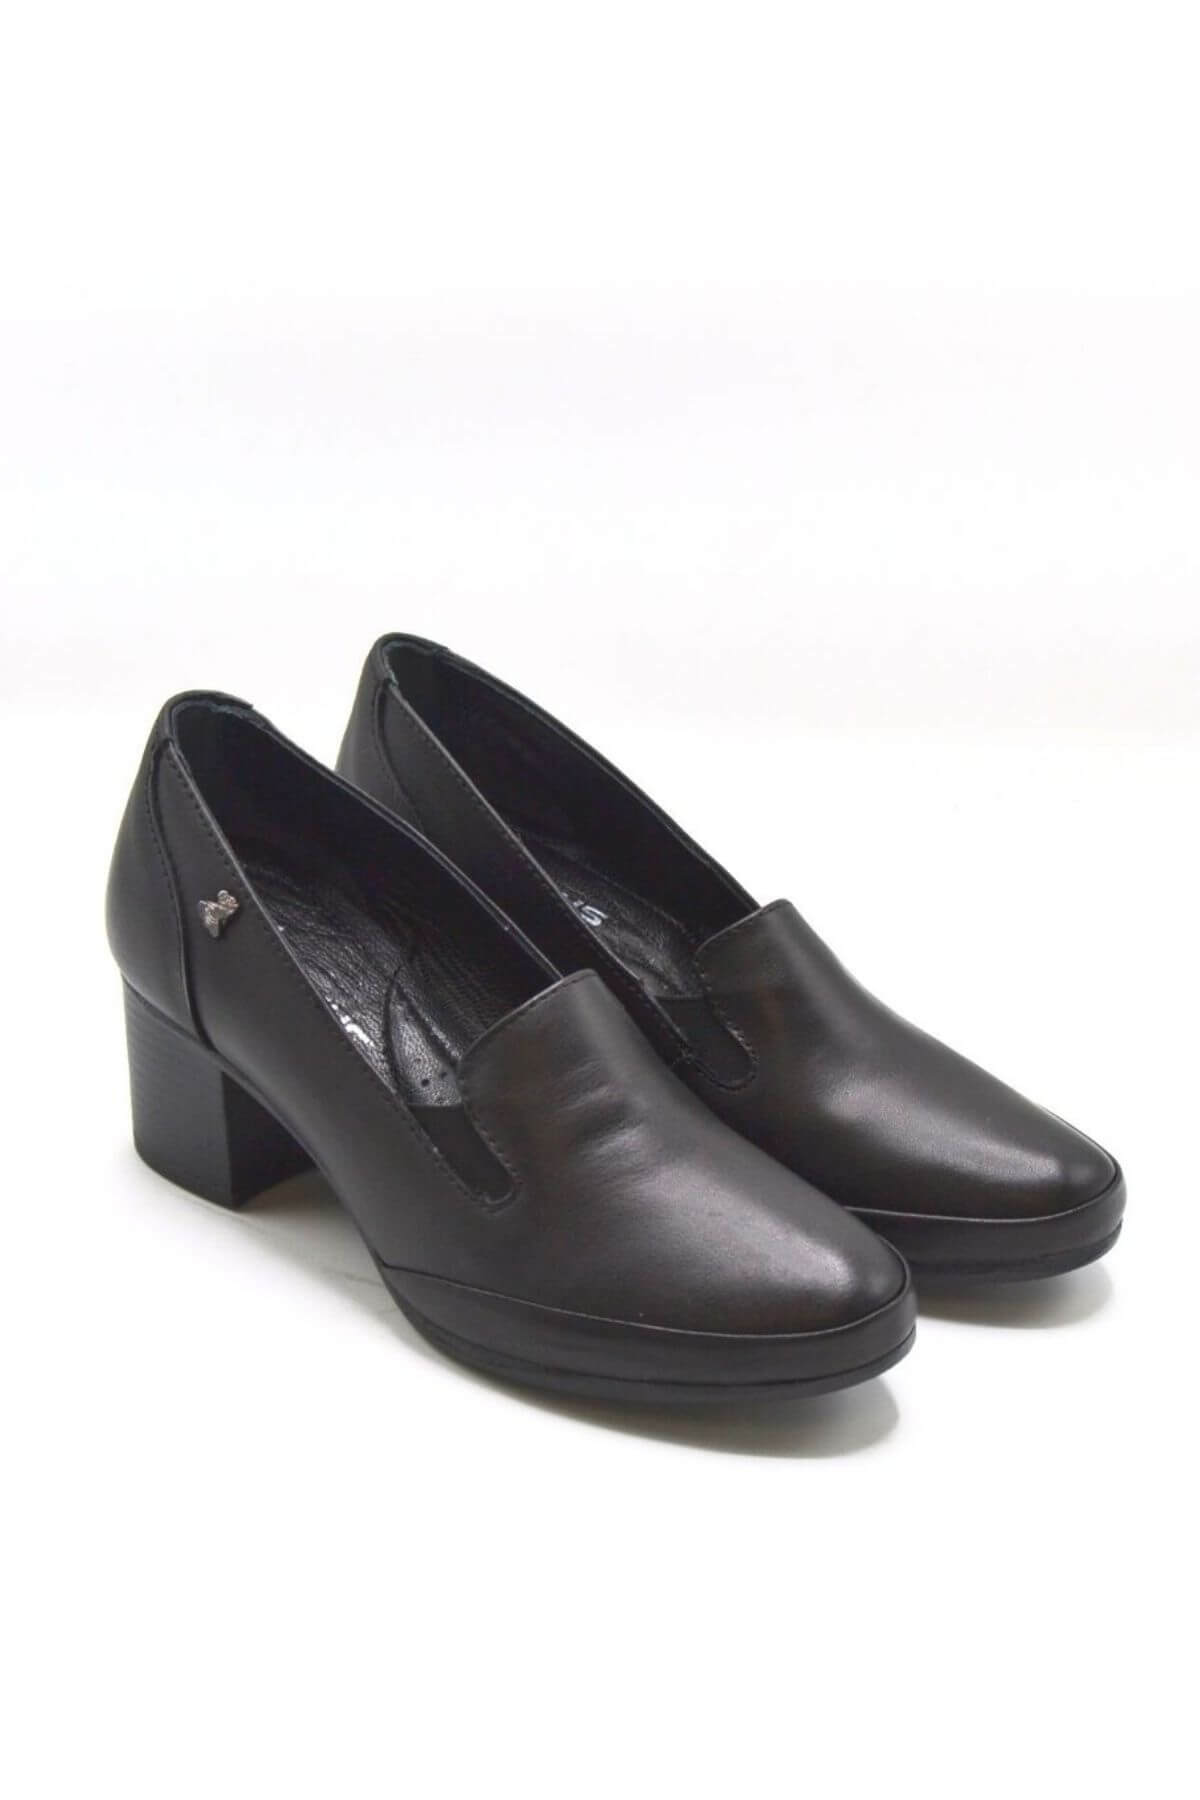 Kadın Topuklu Deri Ayakkabı Siyah 1911902K - Thumbnail